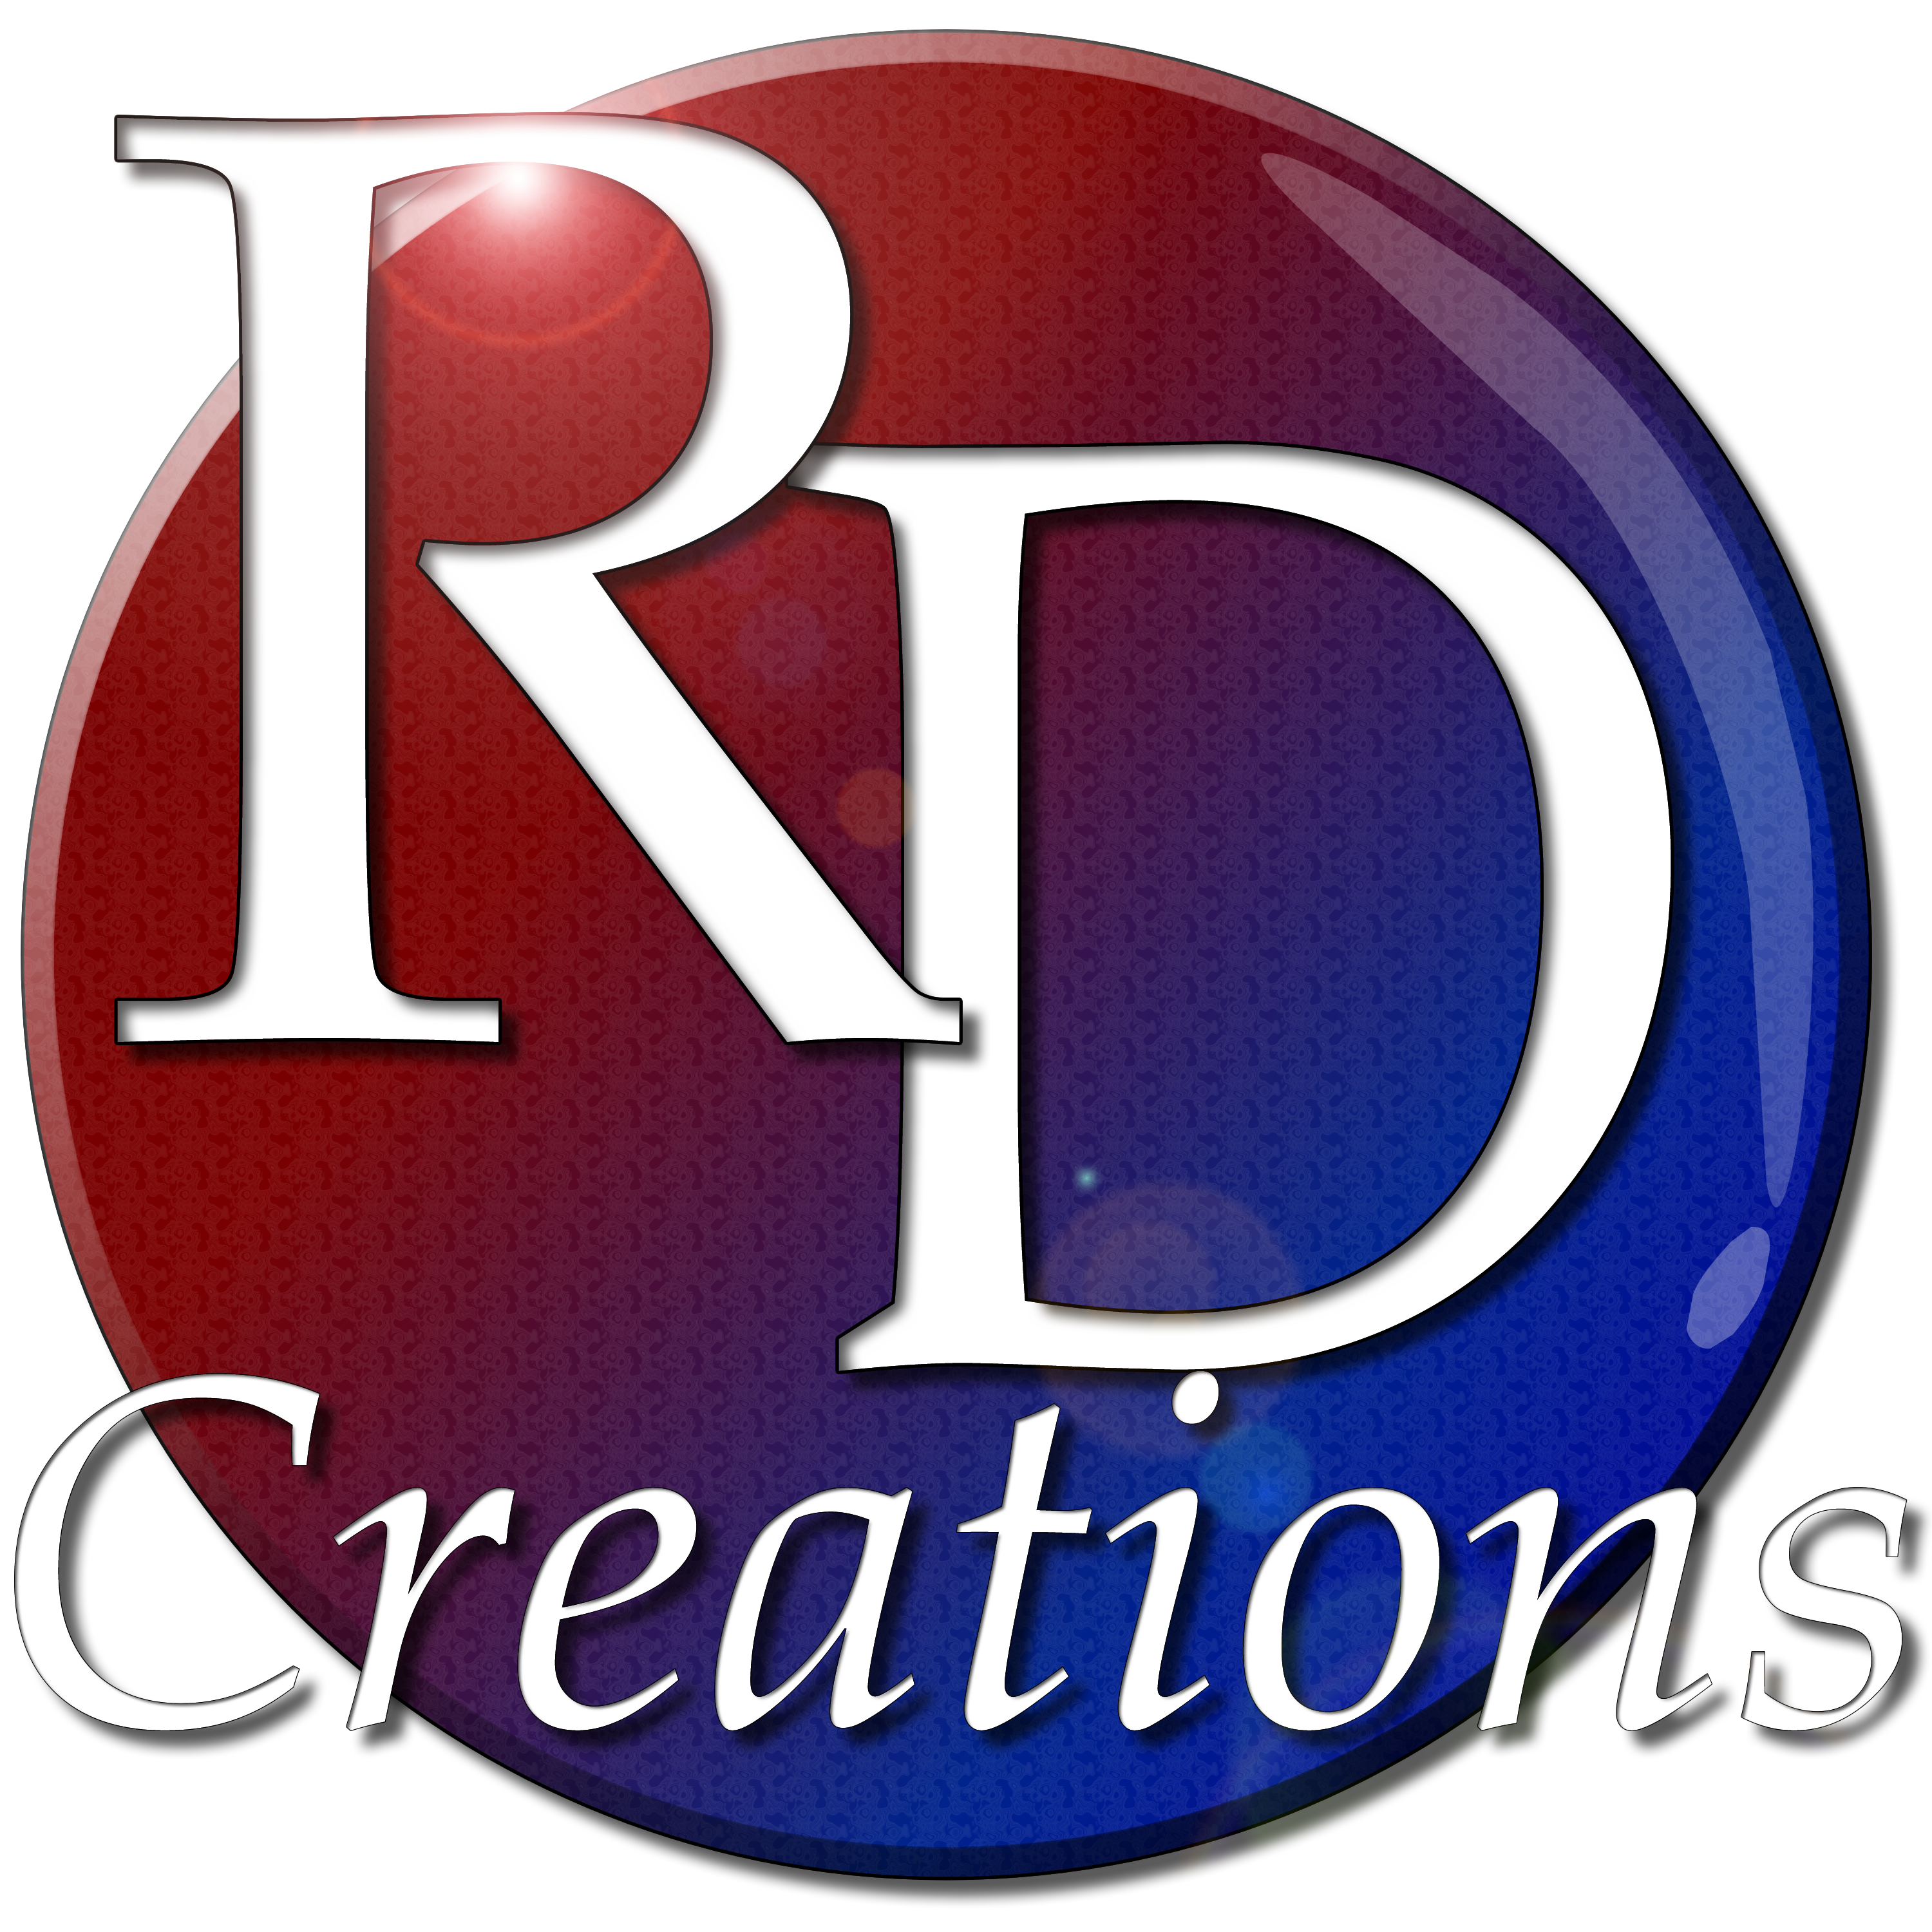 RD luxury packaging design logo by Reda on Dribbble